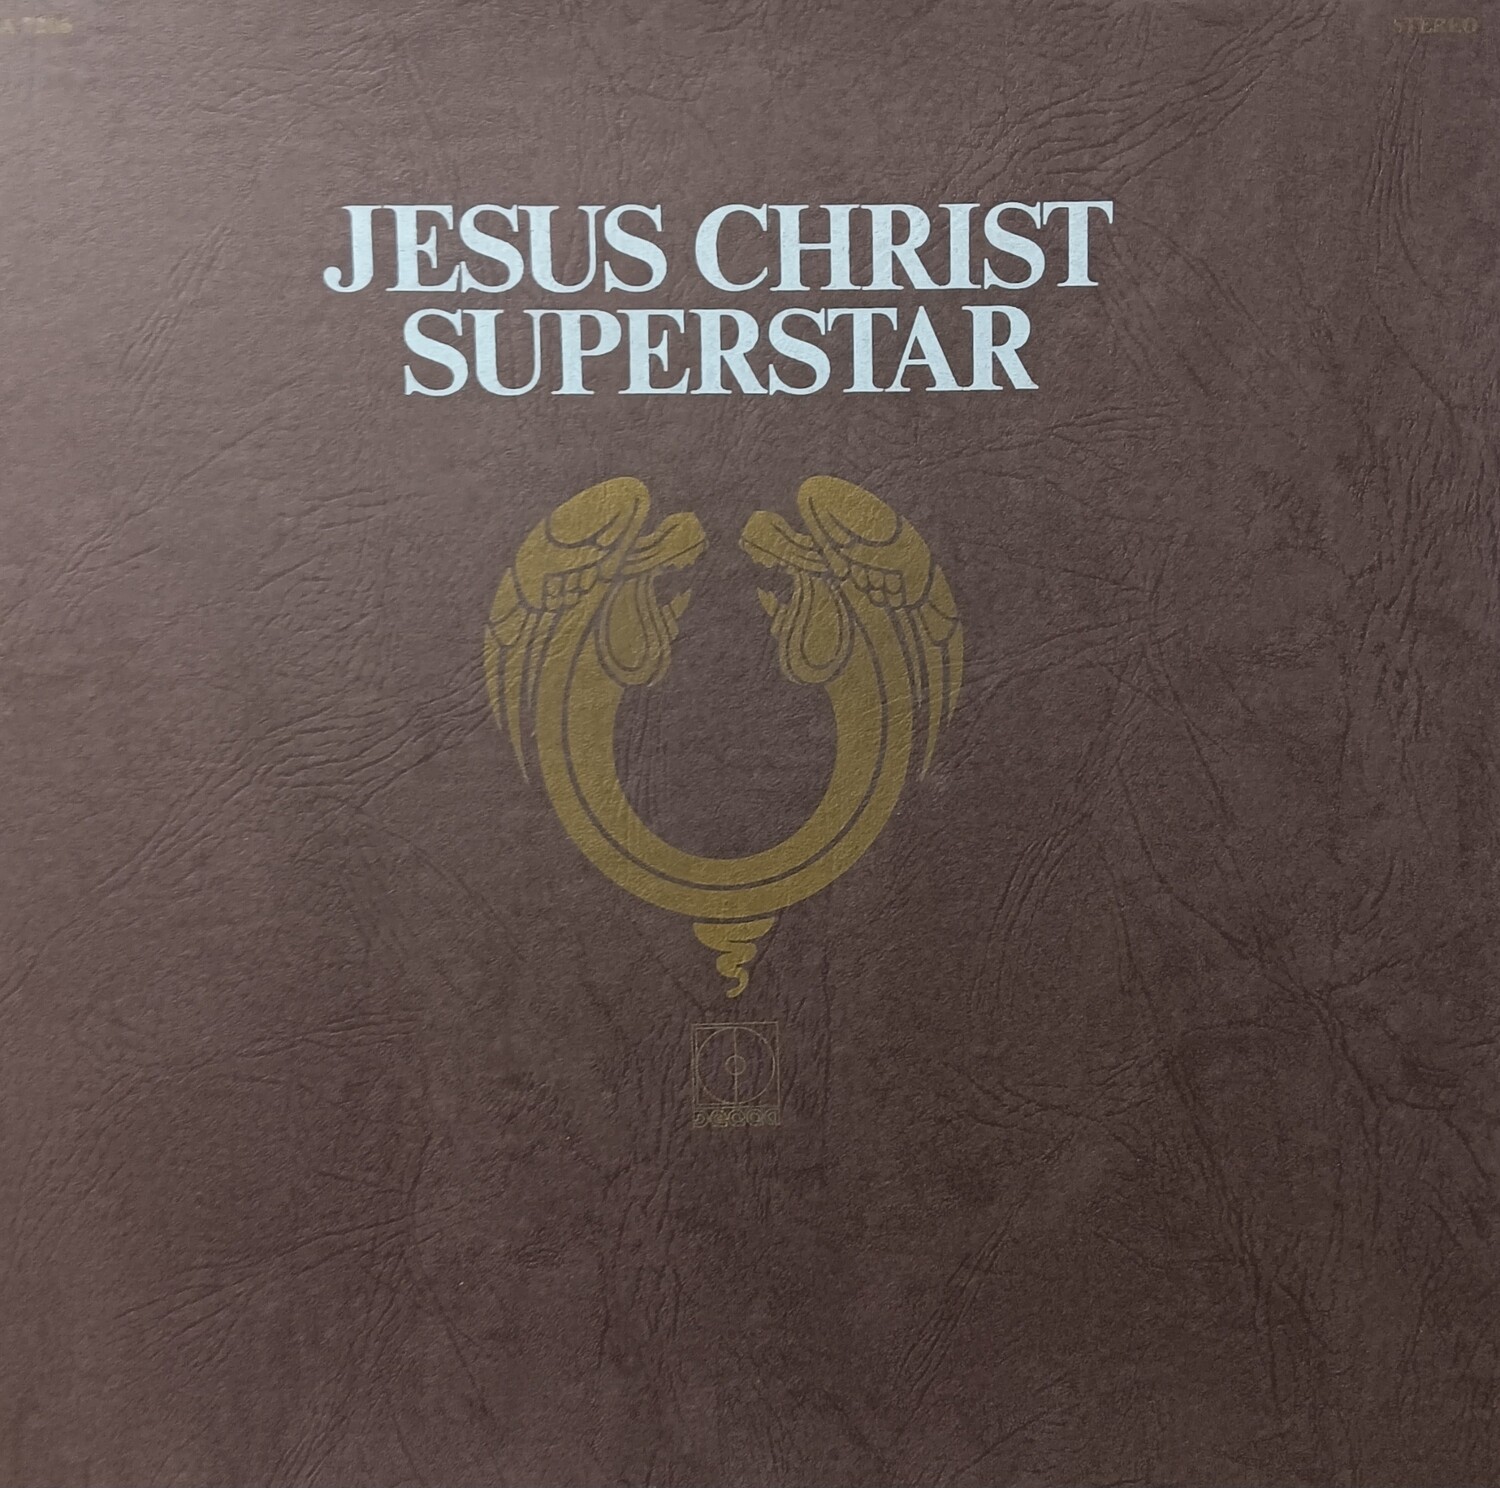 VARIOUS - Jesus Christ Superstar